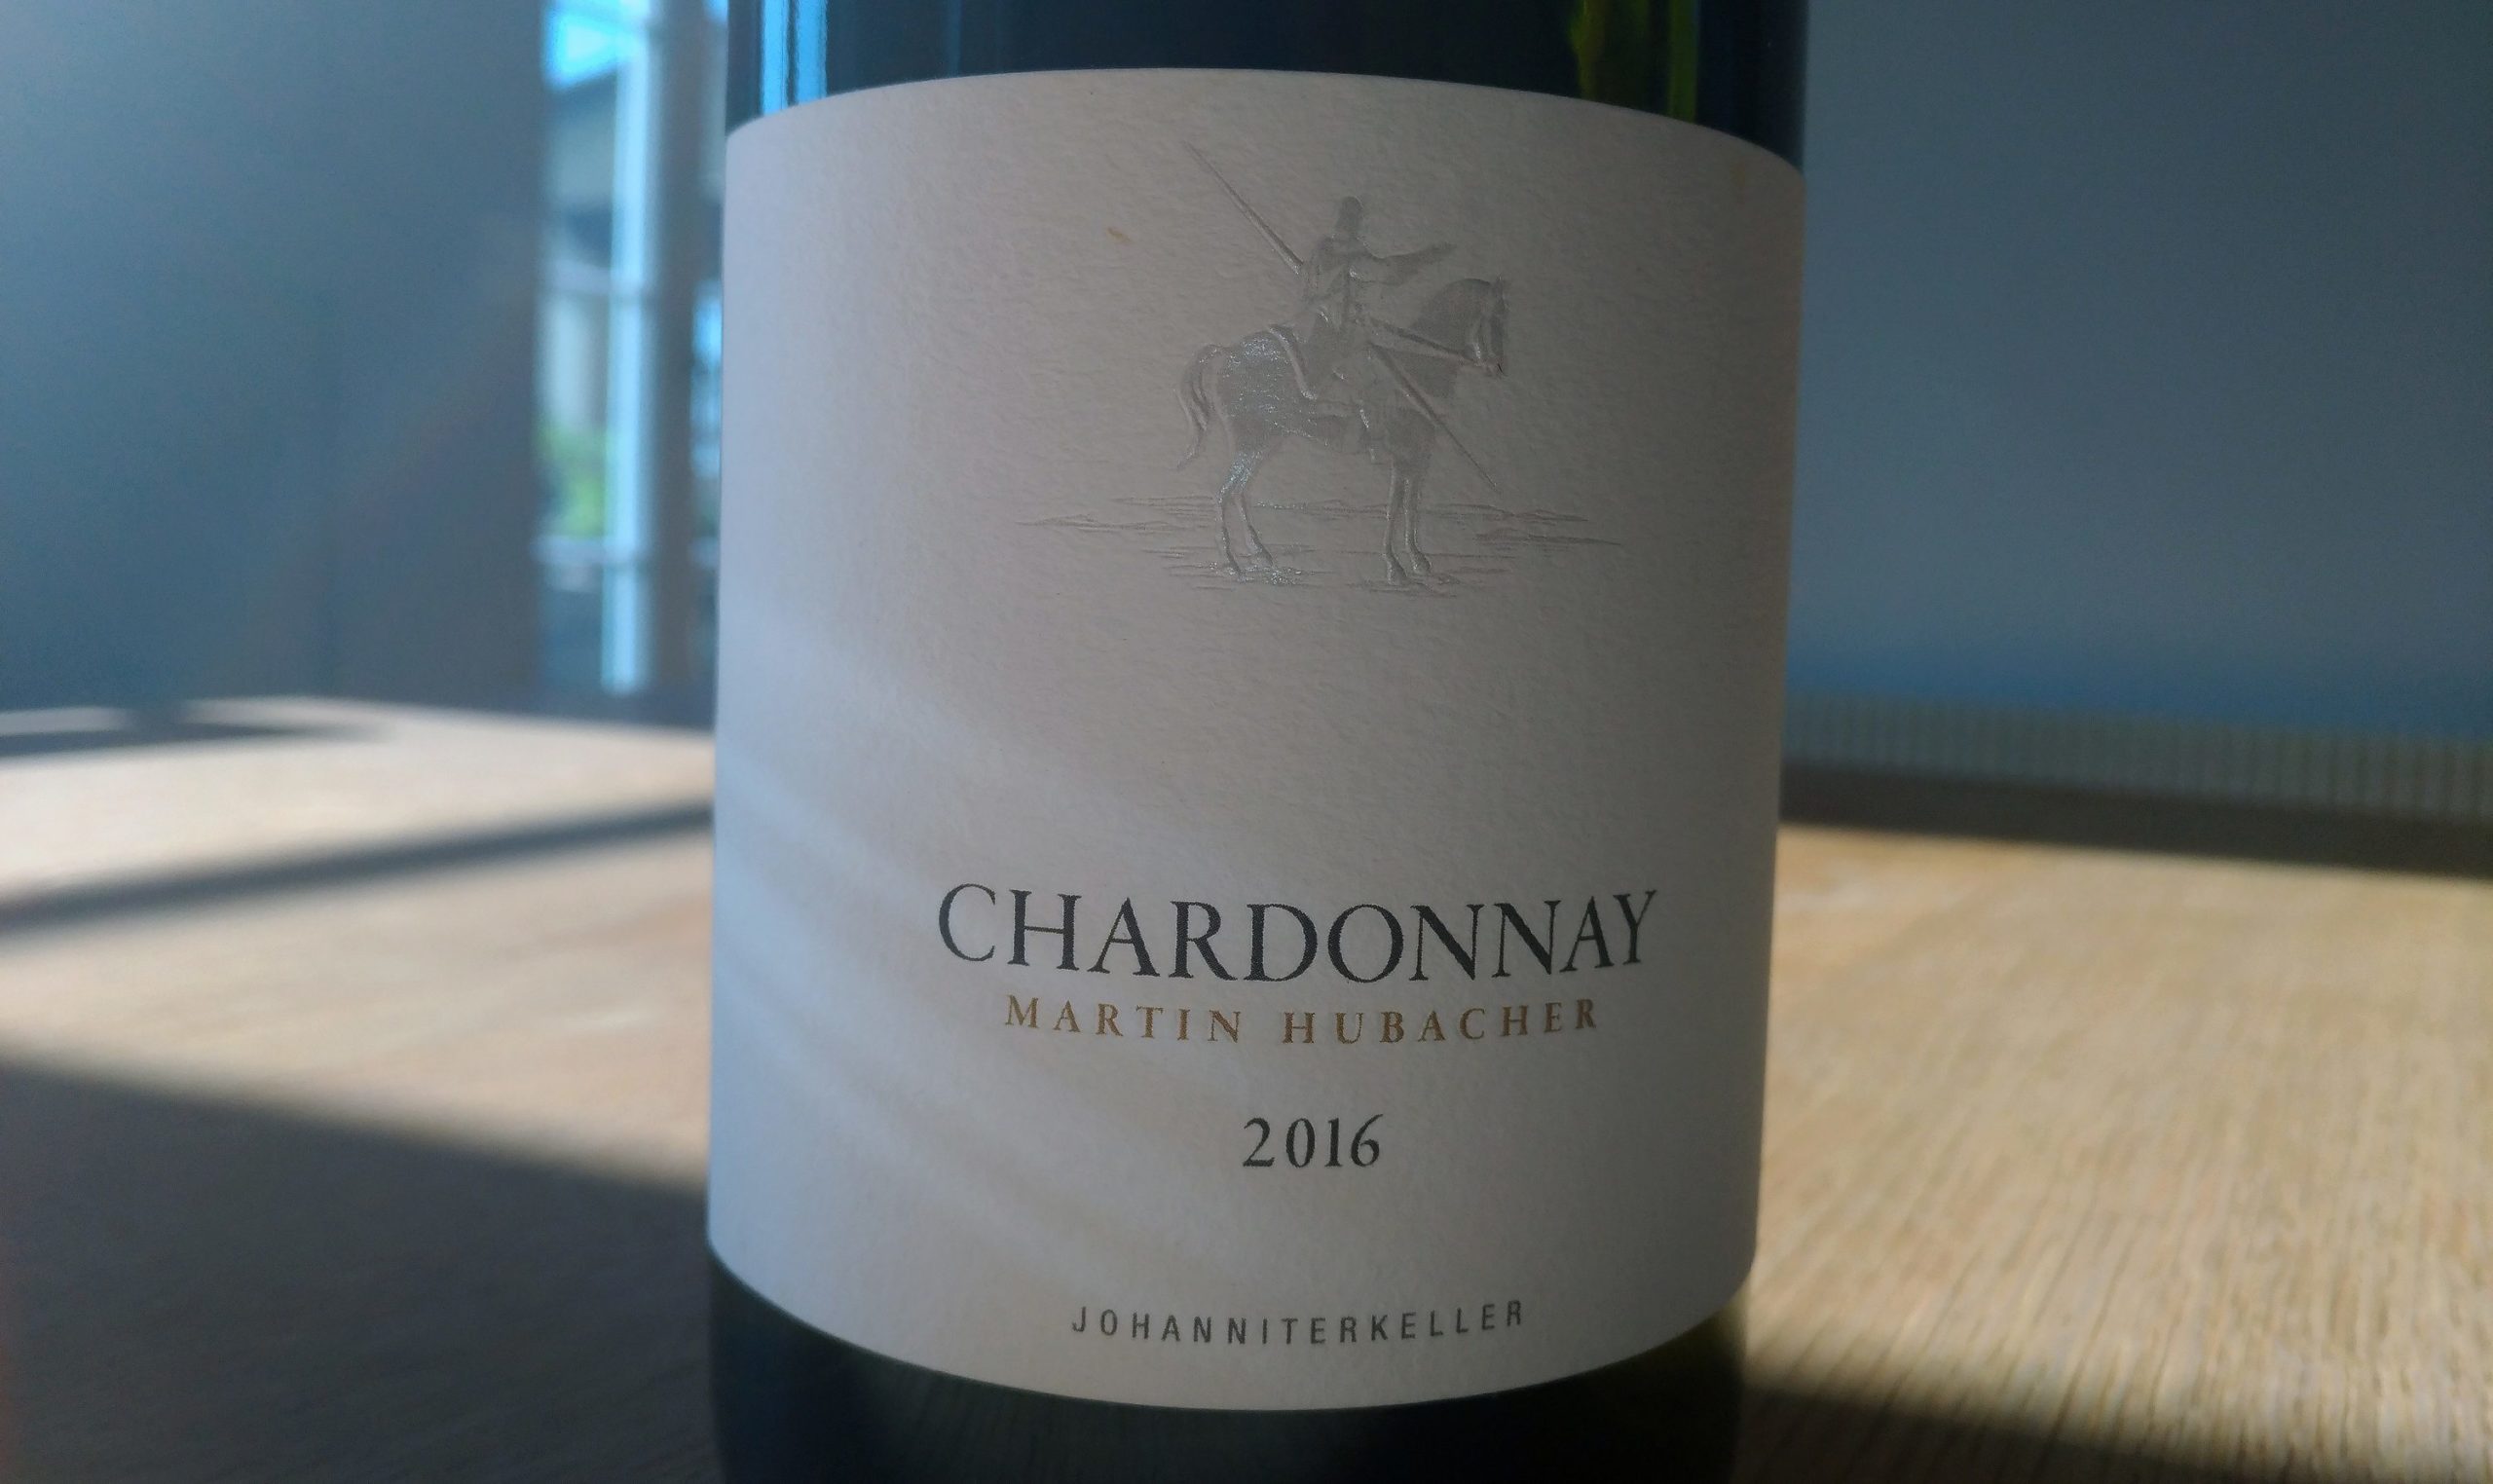 Chardonnay 2016 Martin Hubacher